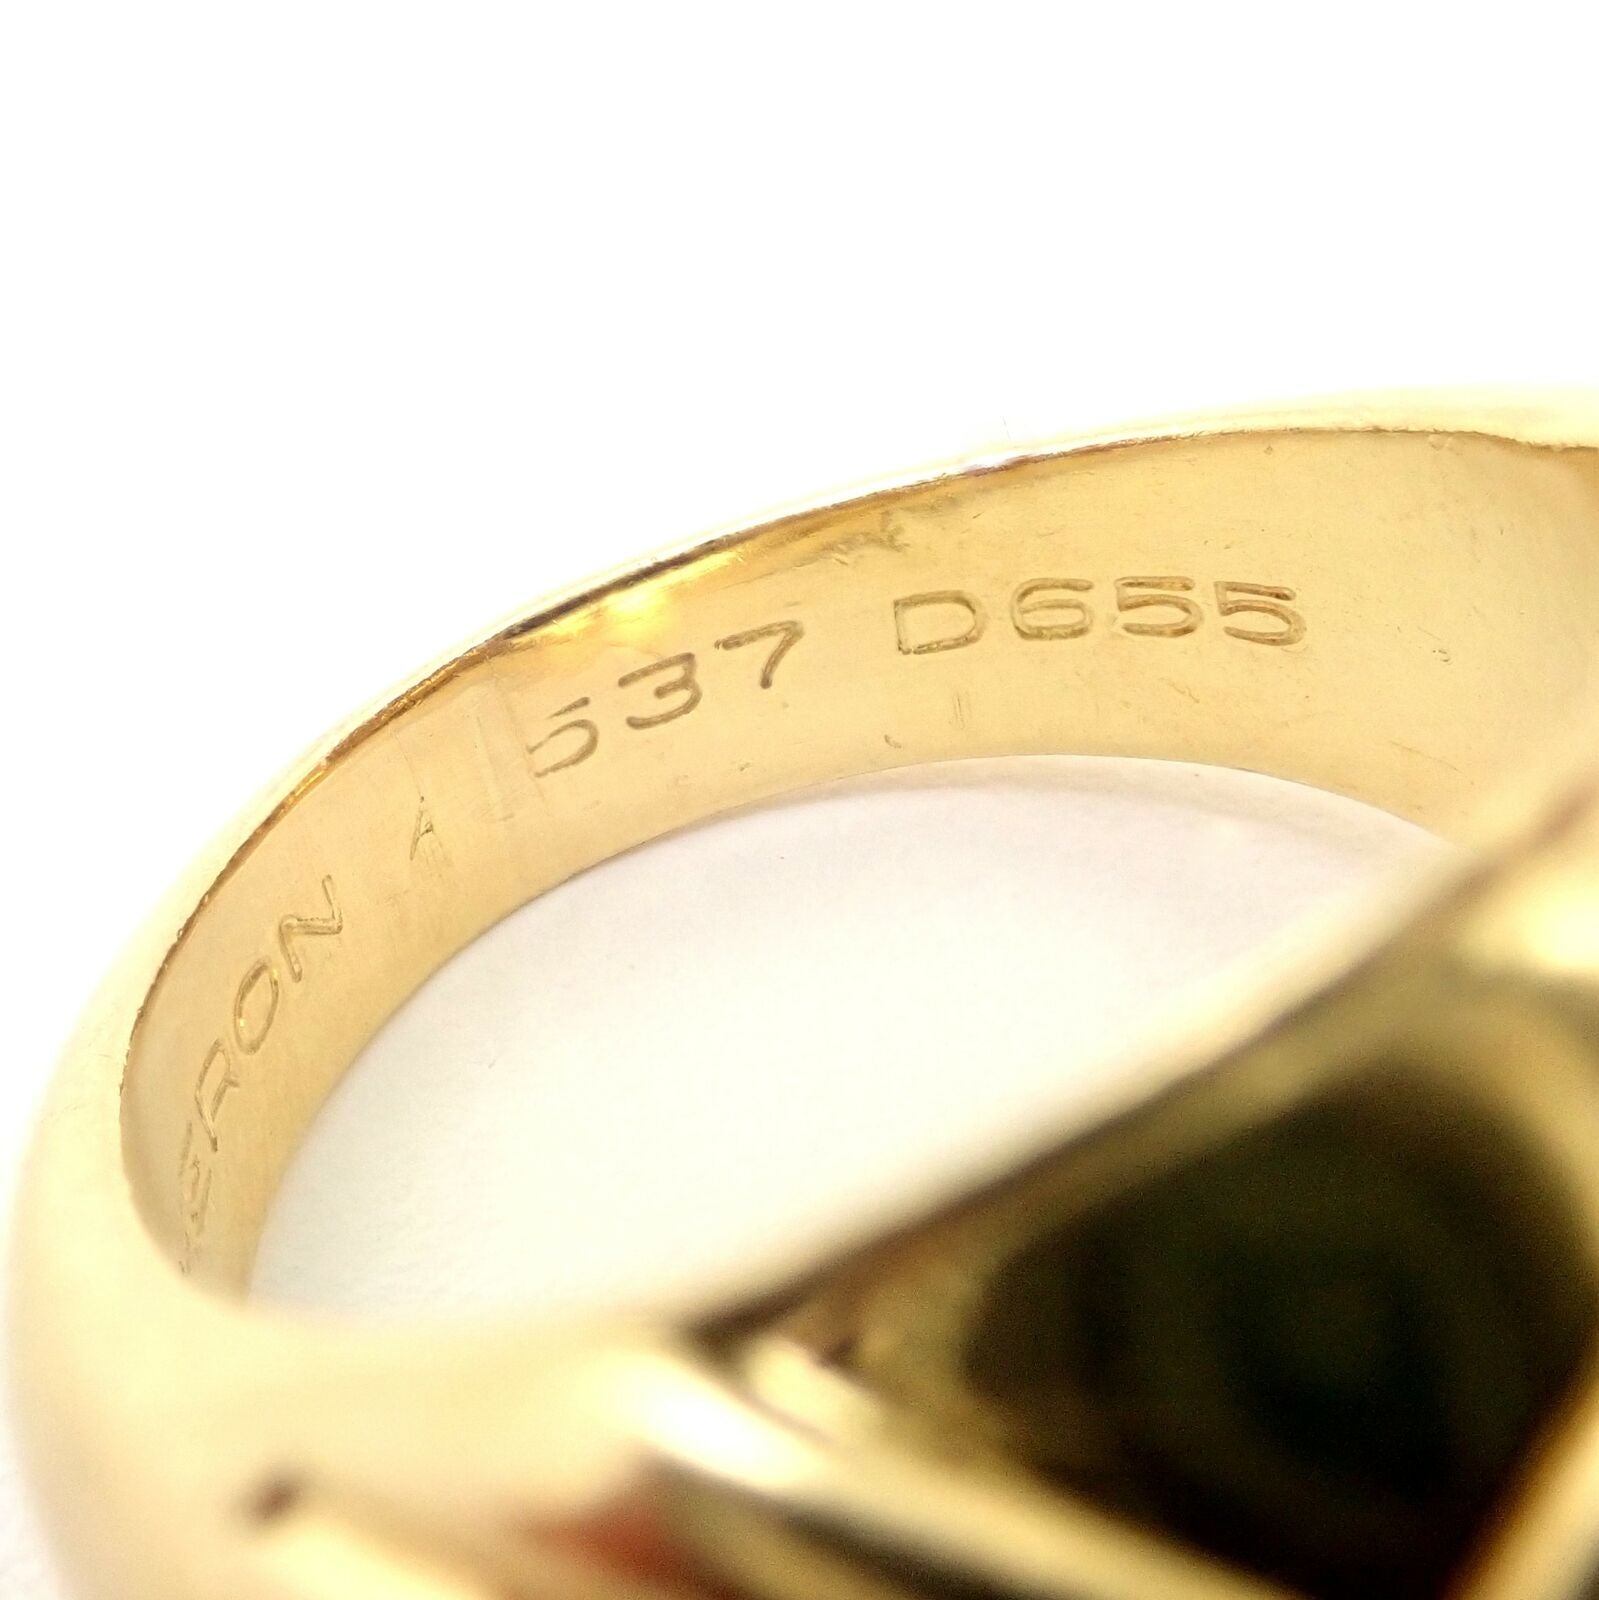 Boucheron Jewelry & Watches:Fine Jewelry:Rings Rare! Authentic Boucheron Paris Jaipur 18k Yellow Gold Lapis Lazuli Ring sz 6.5